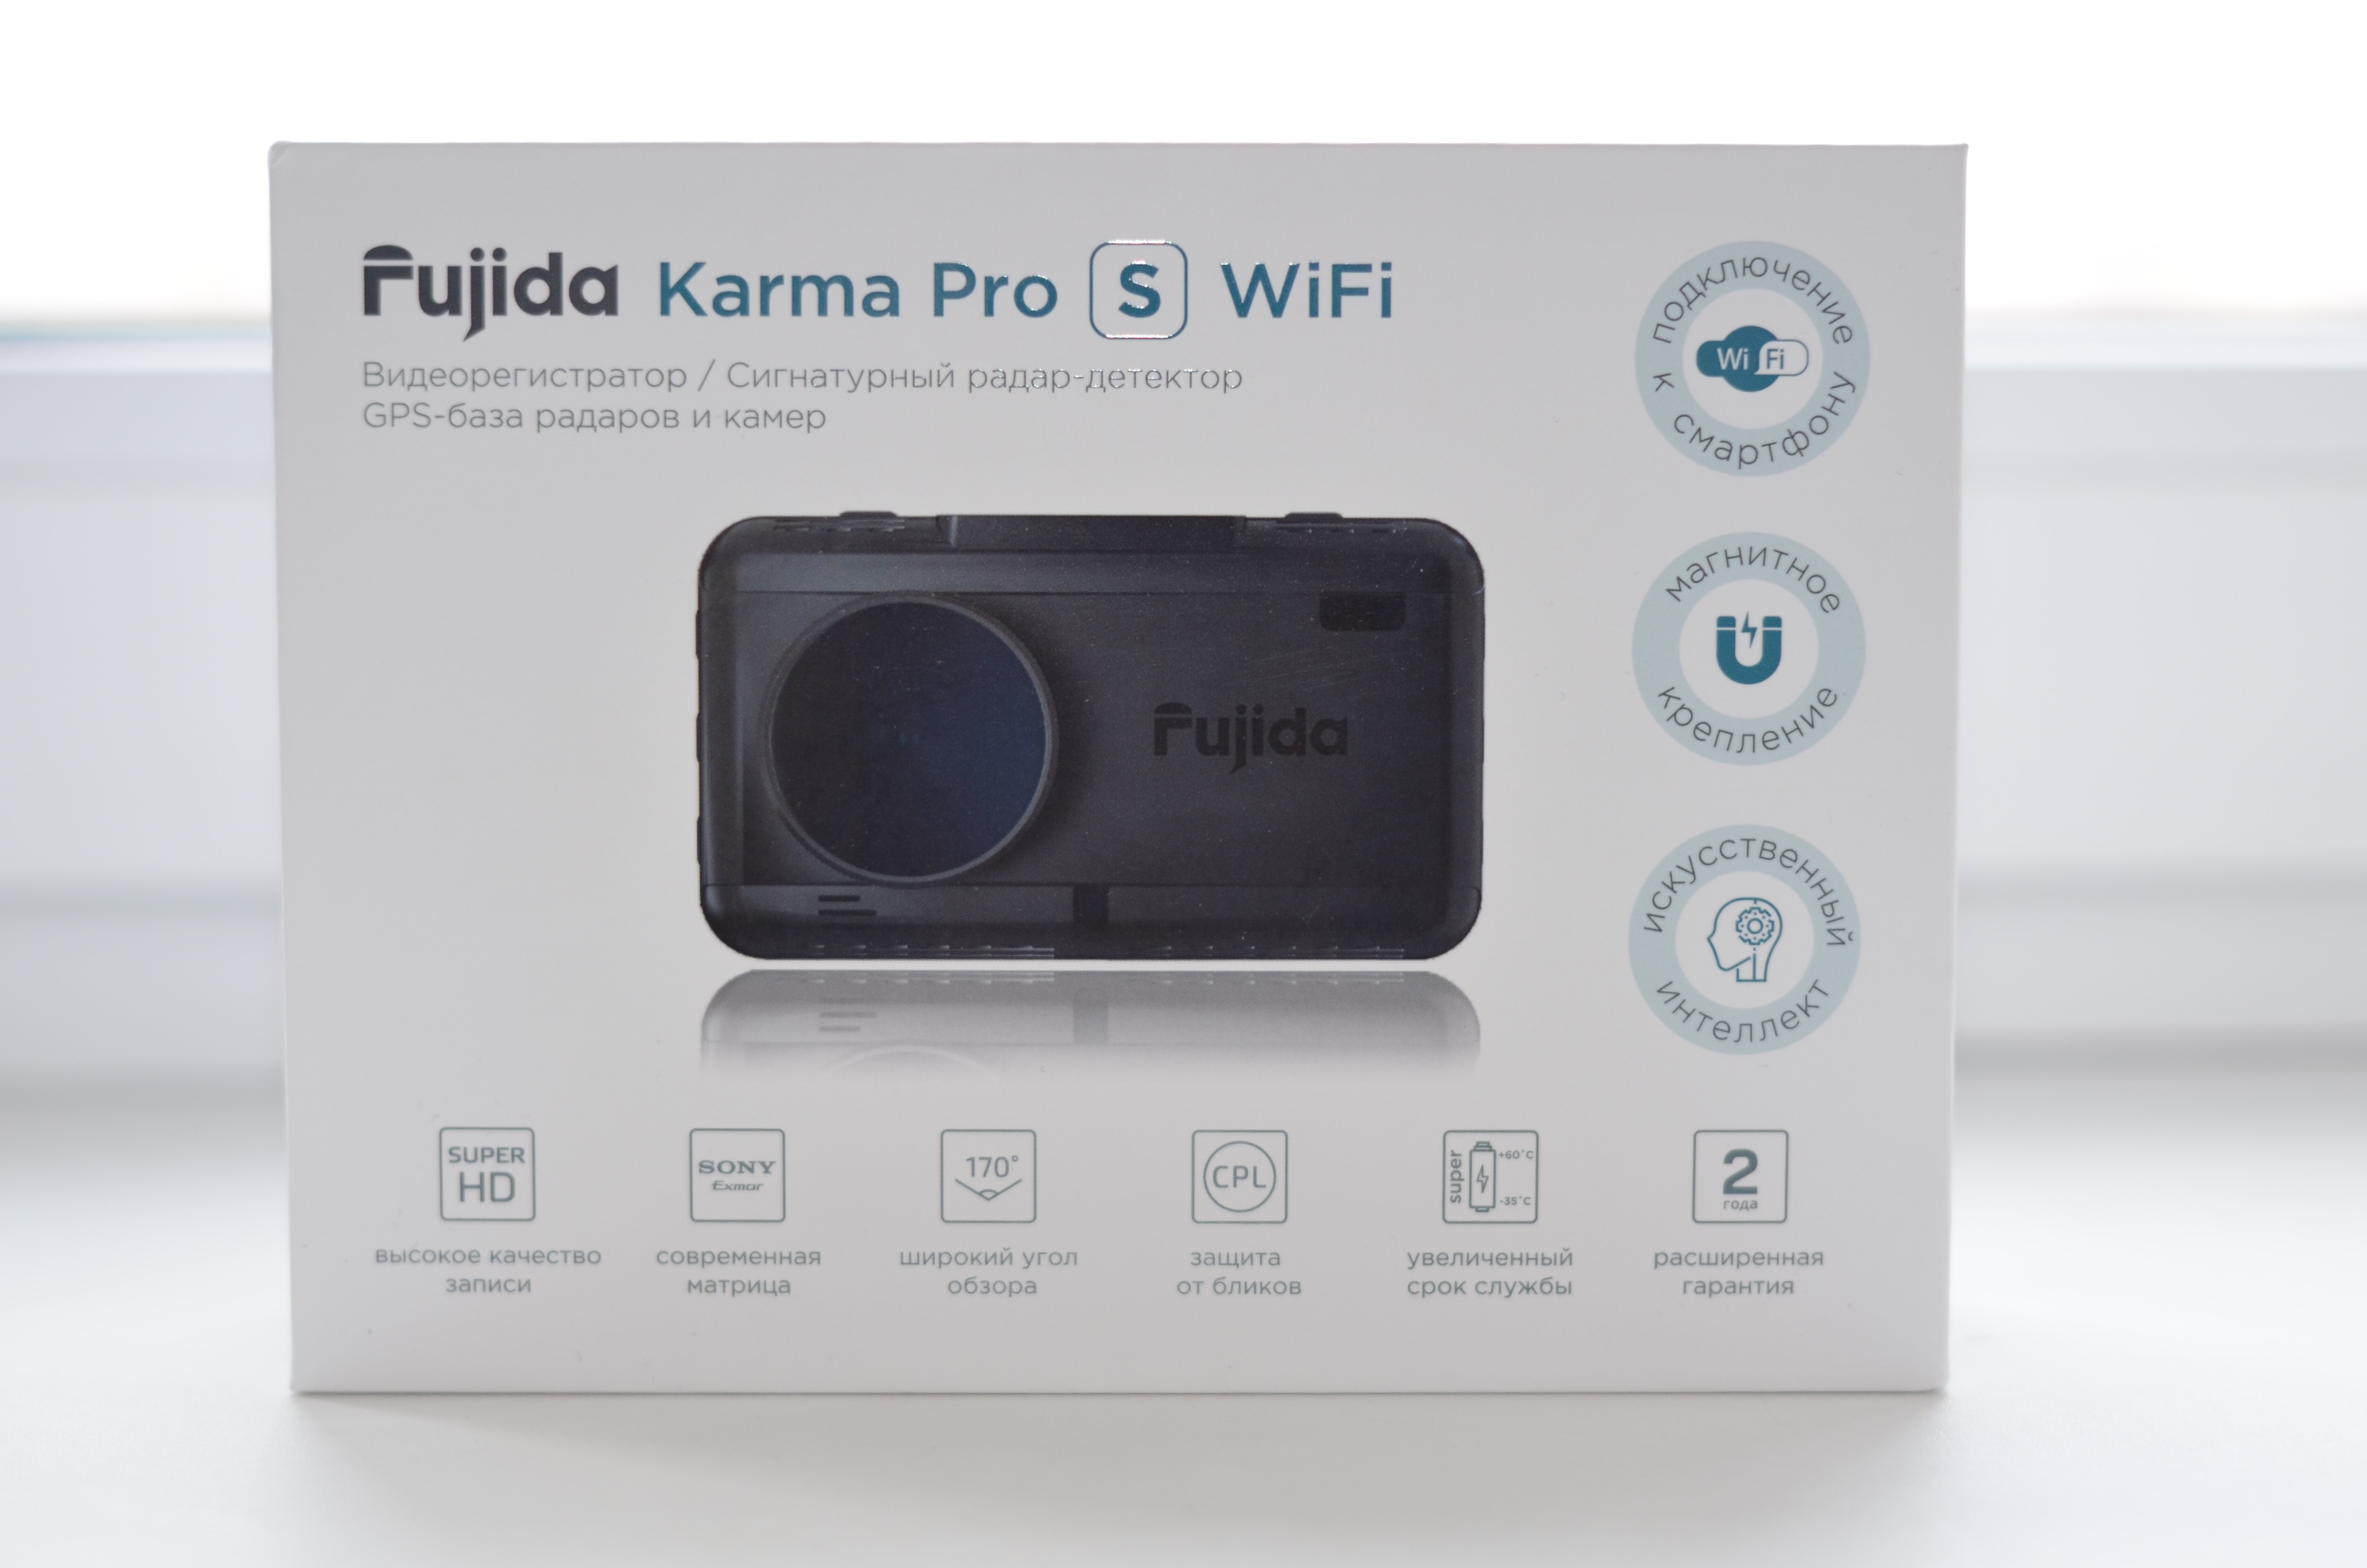 Fujida karma pro wifi купить. Fujida Karma Pro s WIFI. Fujida Karma Pro s в упаковке. Видеорегистратор Fujida Karma blik WIFI. Fujida Karma Pro s WIFI коробка.